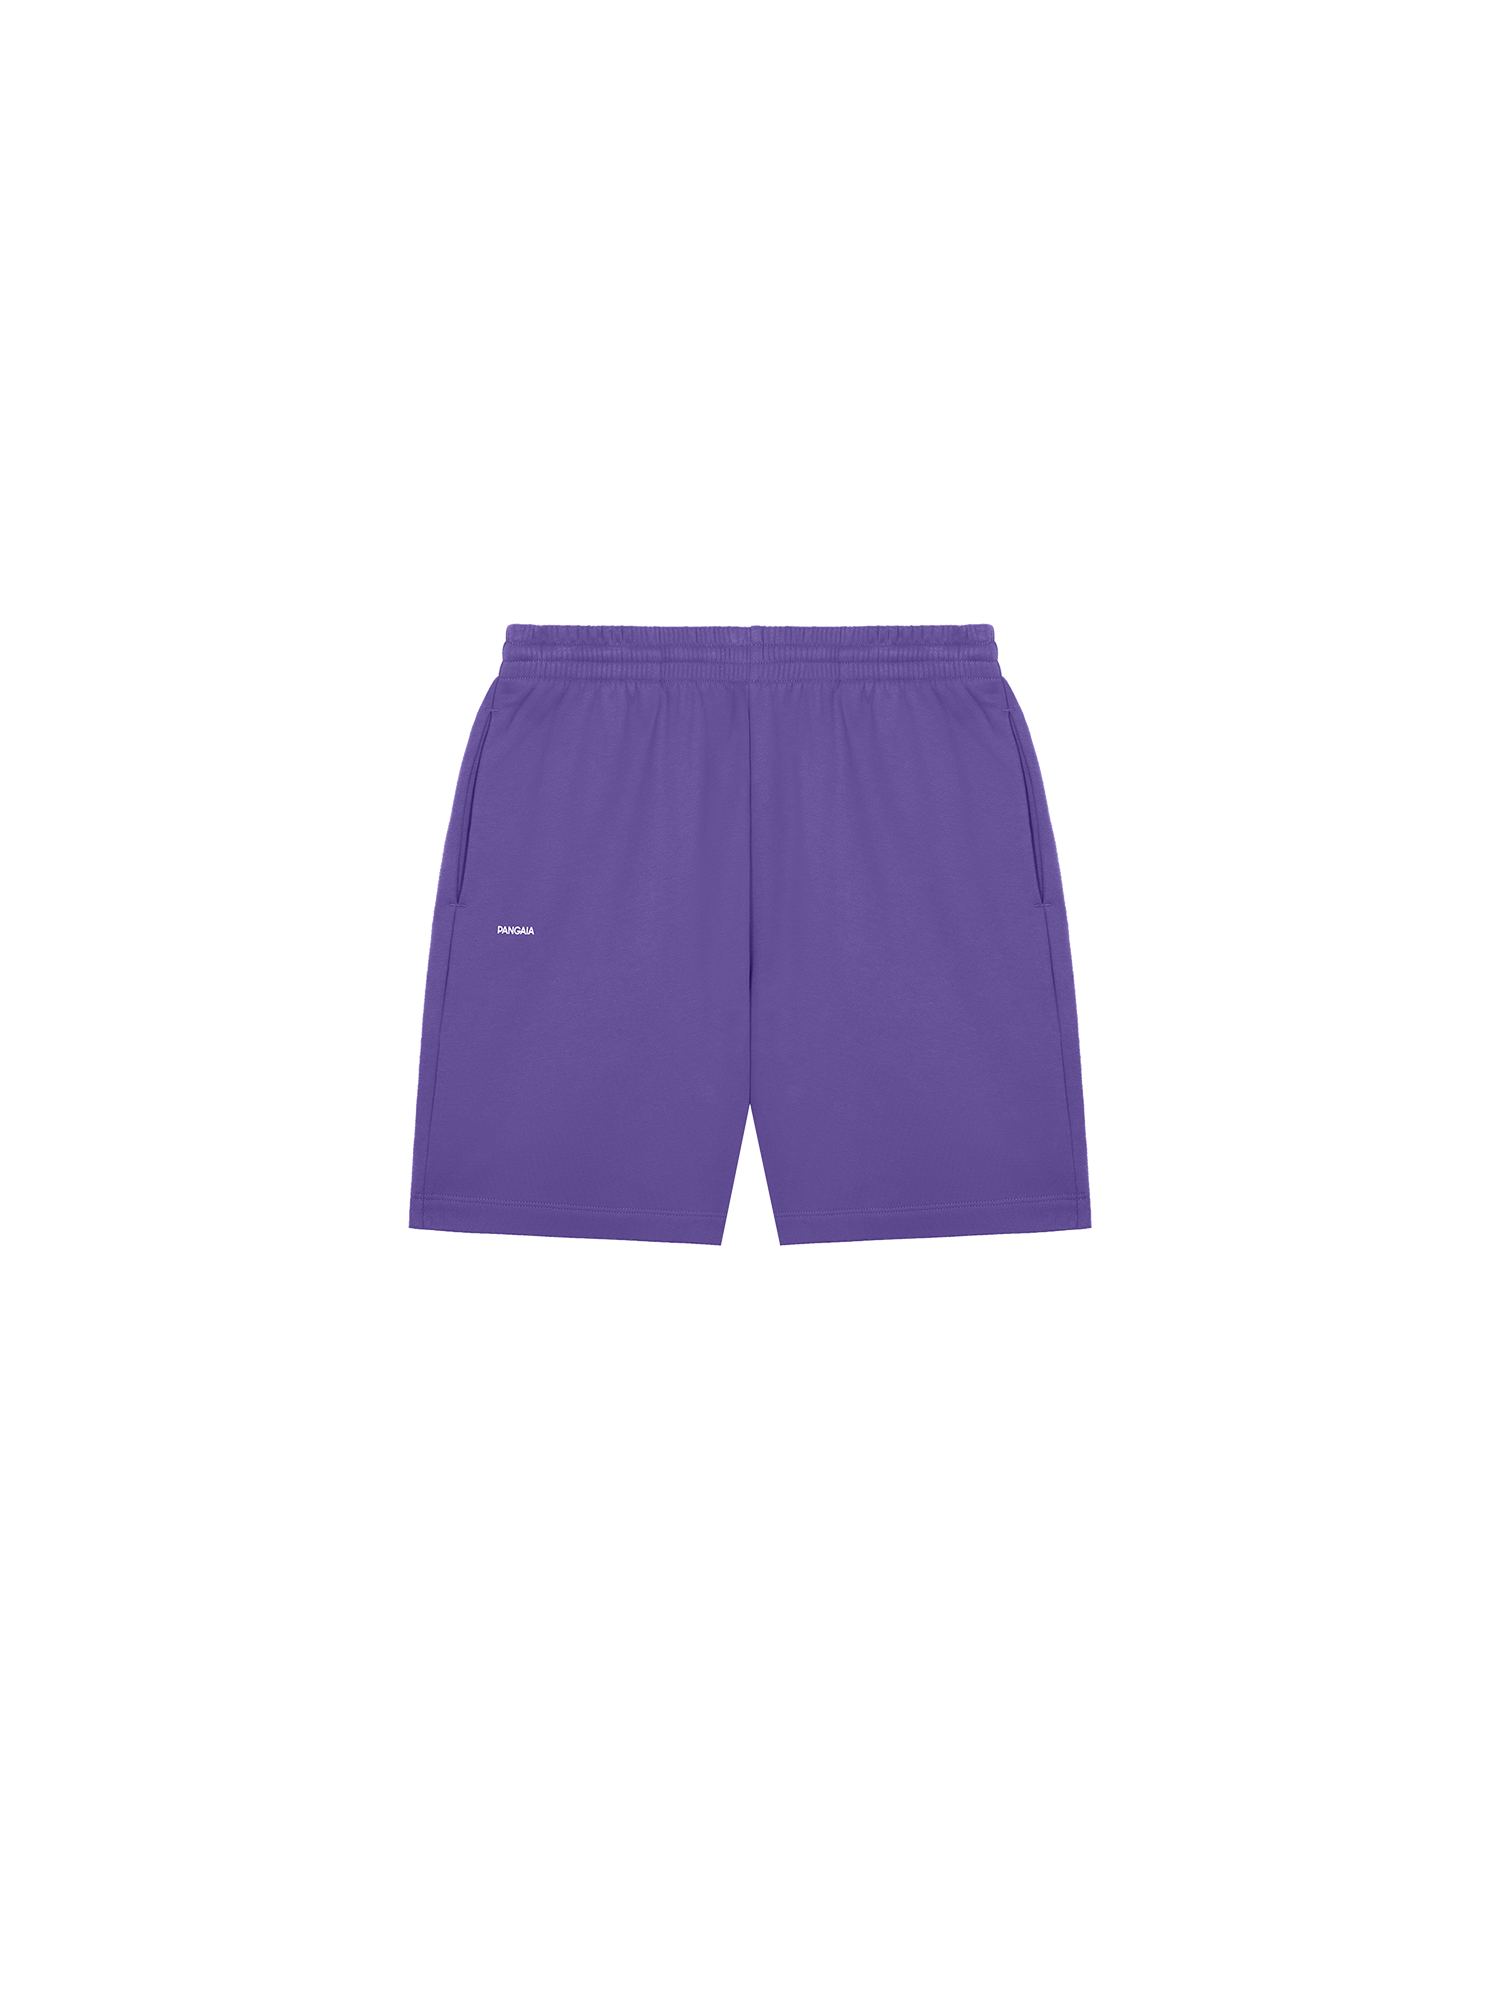 365_Midweight_Mid_Length_Shorts_Ultraviolet_packshot-1